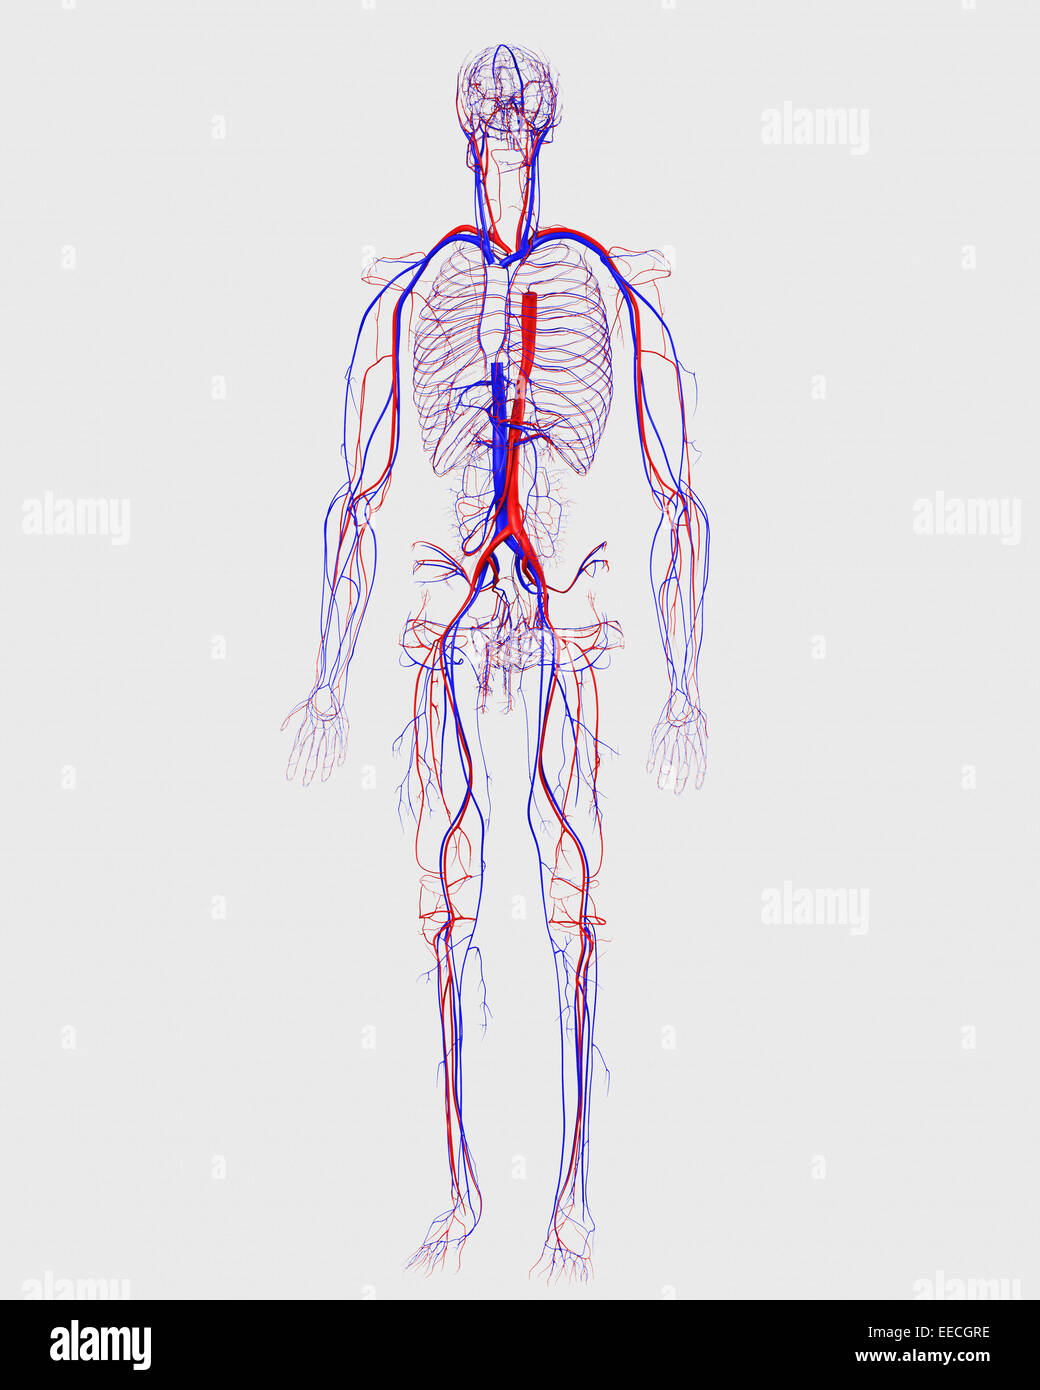 Human circulatory system. Stock Photo